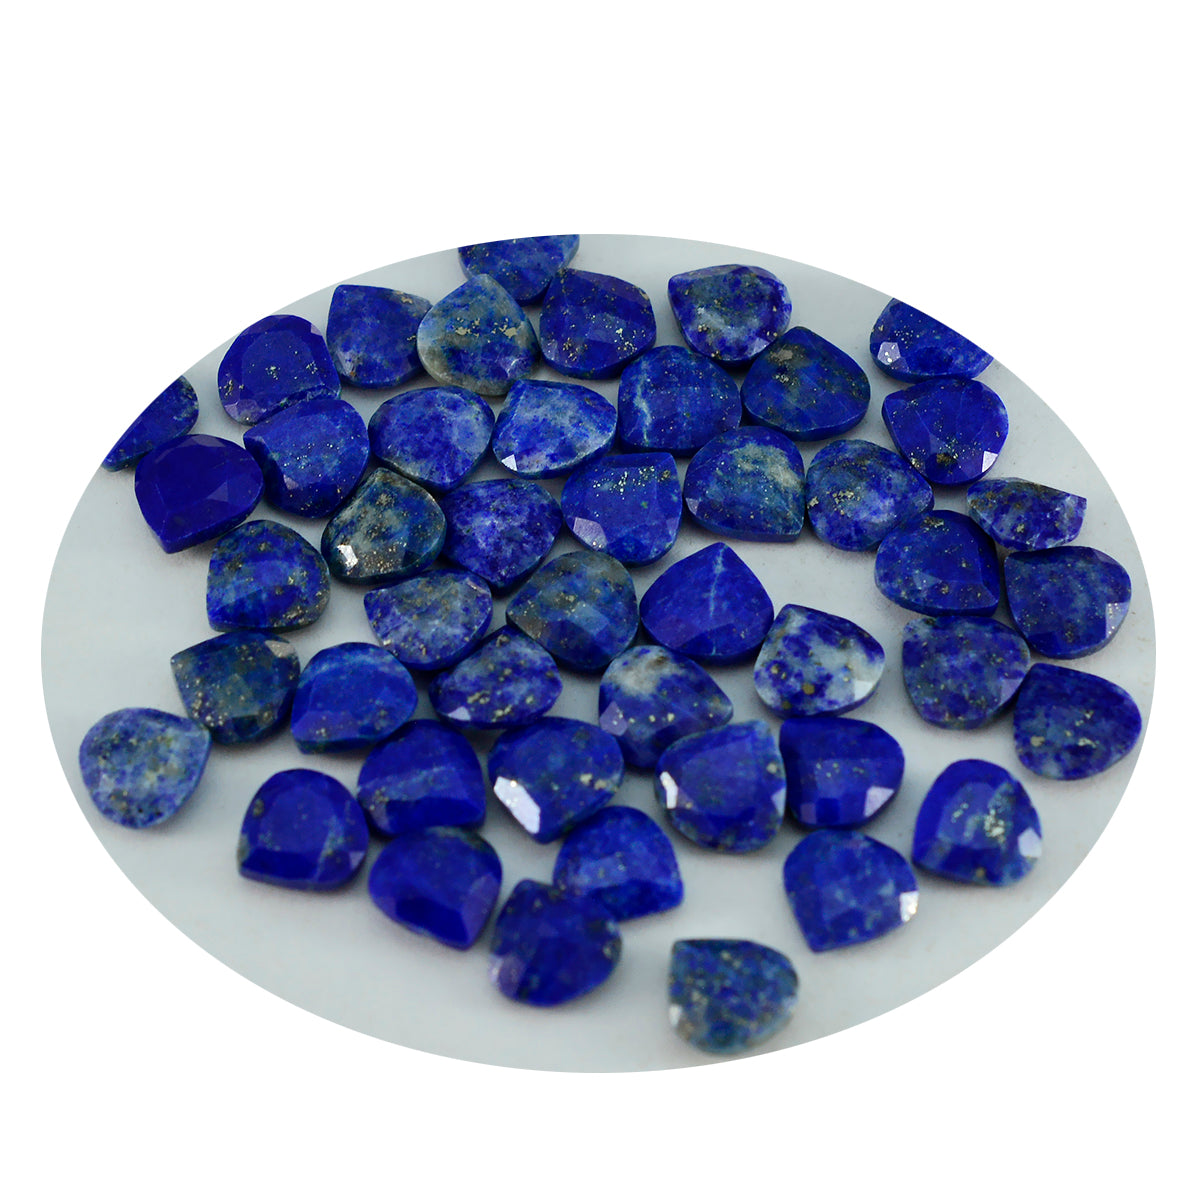 Riyogems 1PC Real Blue Lapis Lazuli Faceted 7x7 mm Heart Shape fantastic Quality Loose Gems